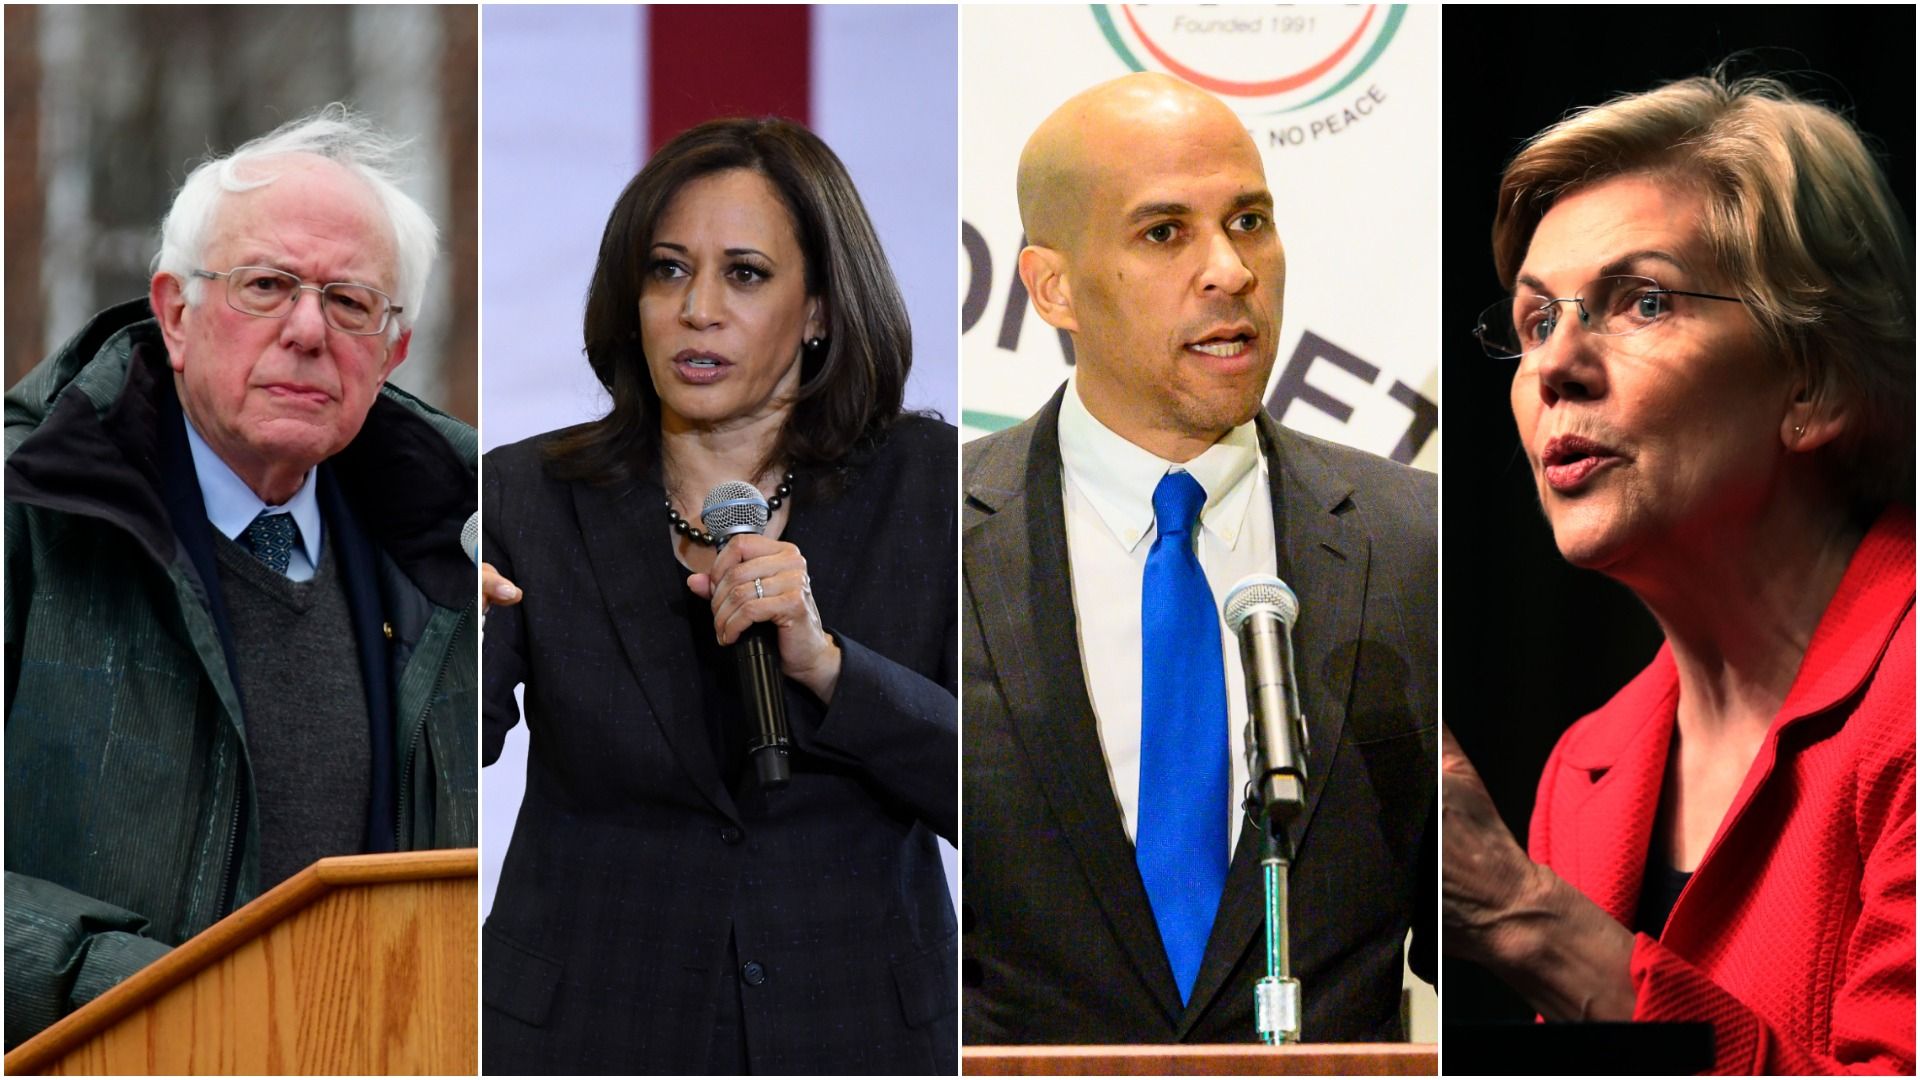 2020 Democratic presidential candidates, Senators Bernie Sanders, Kamala Harris, Cory Booker and Elizabeth Warren